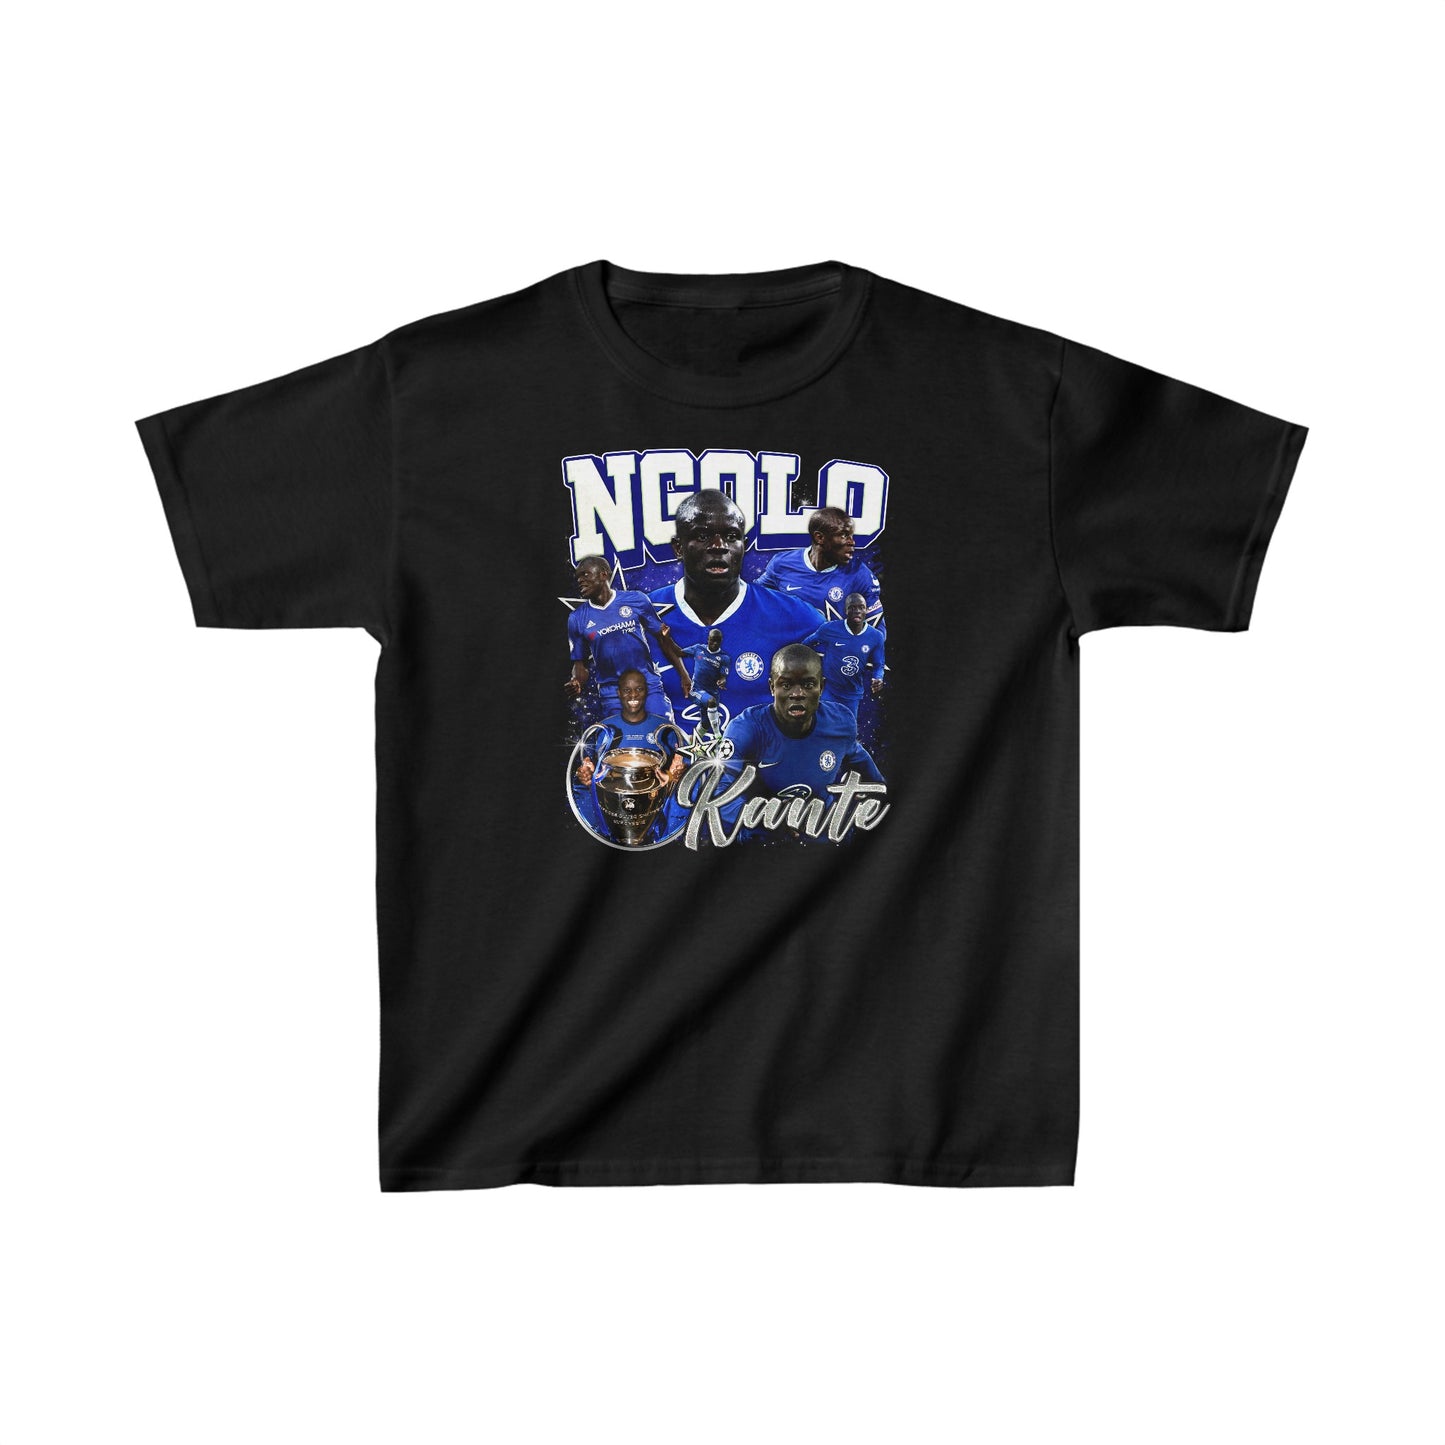 Ngolo Kante Chelsea Graphic T-Shirt